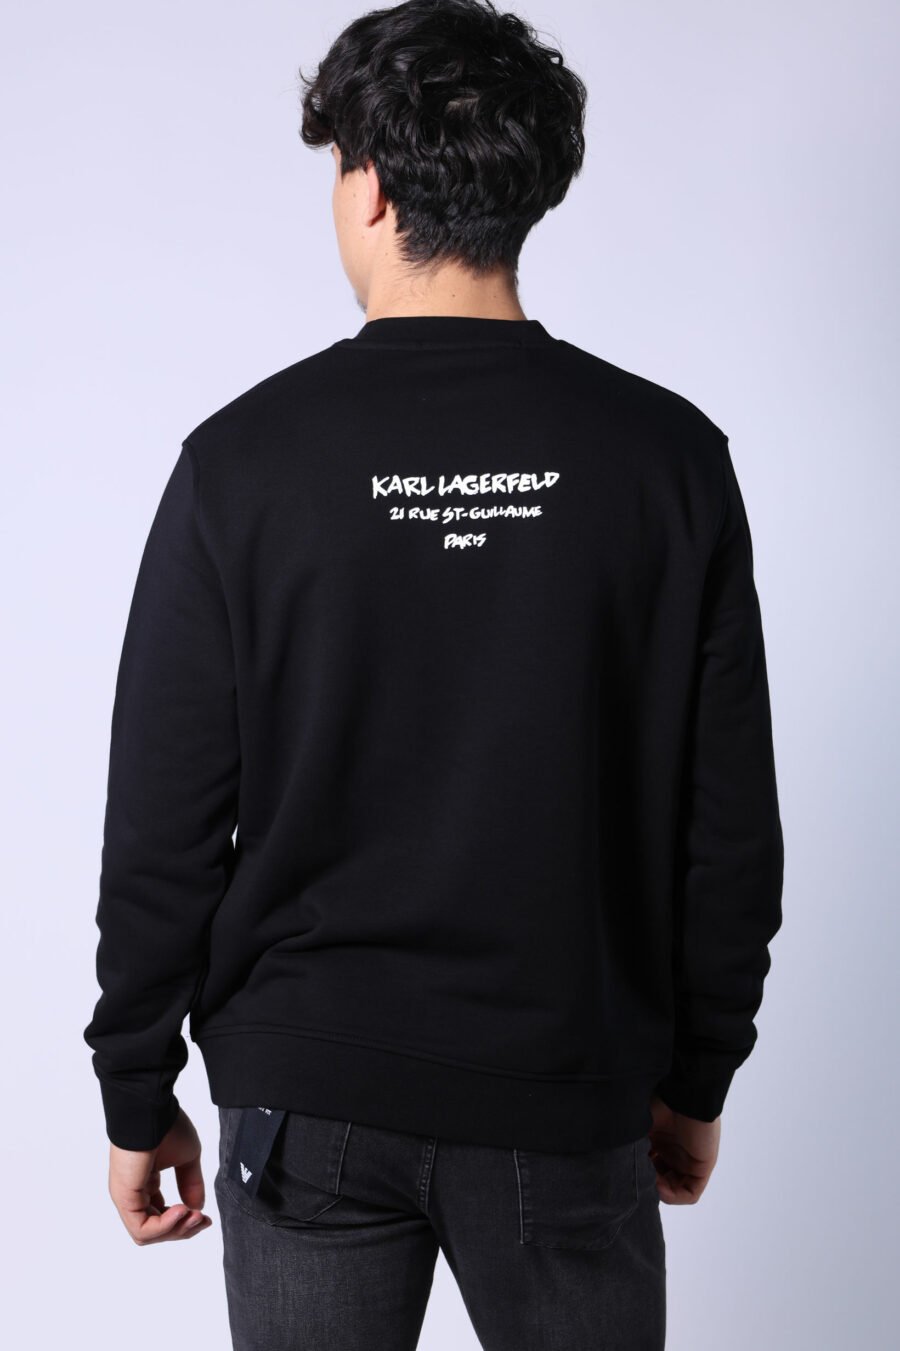 Black sweatshirt with "karl" camouflage profile - Untitled Catalog 05774